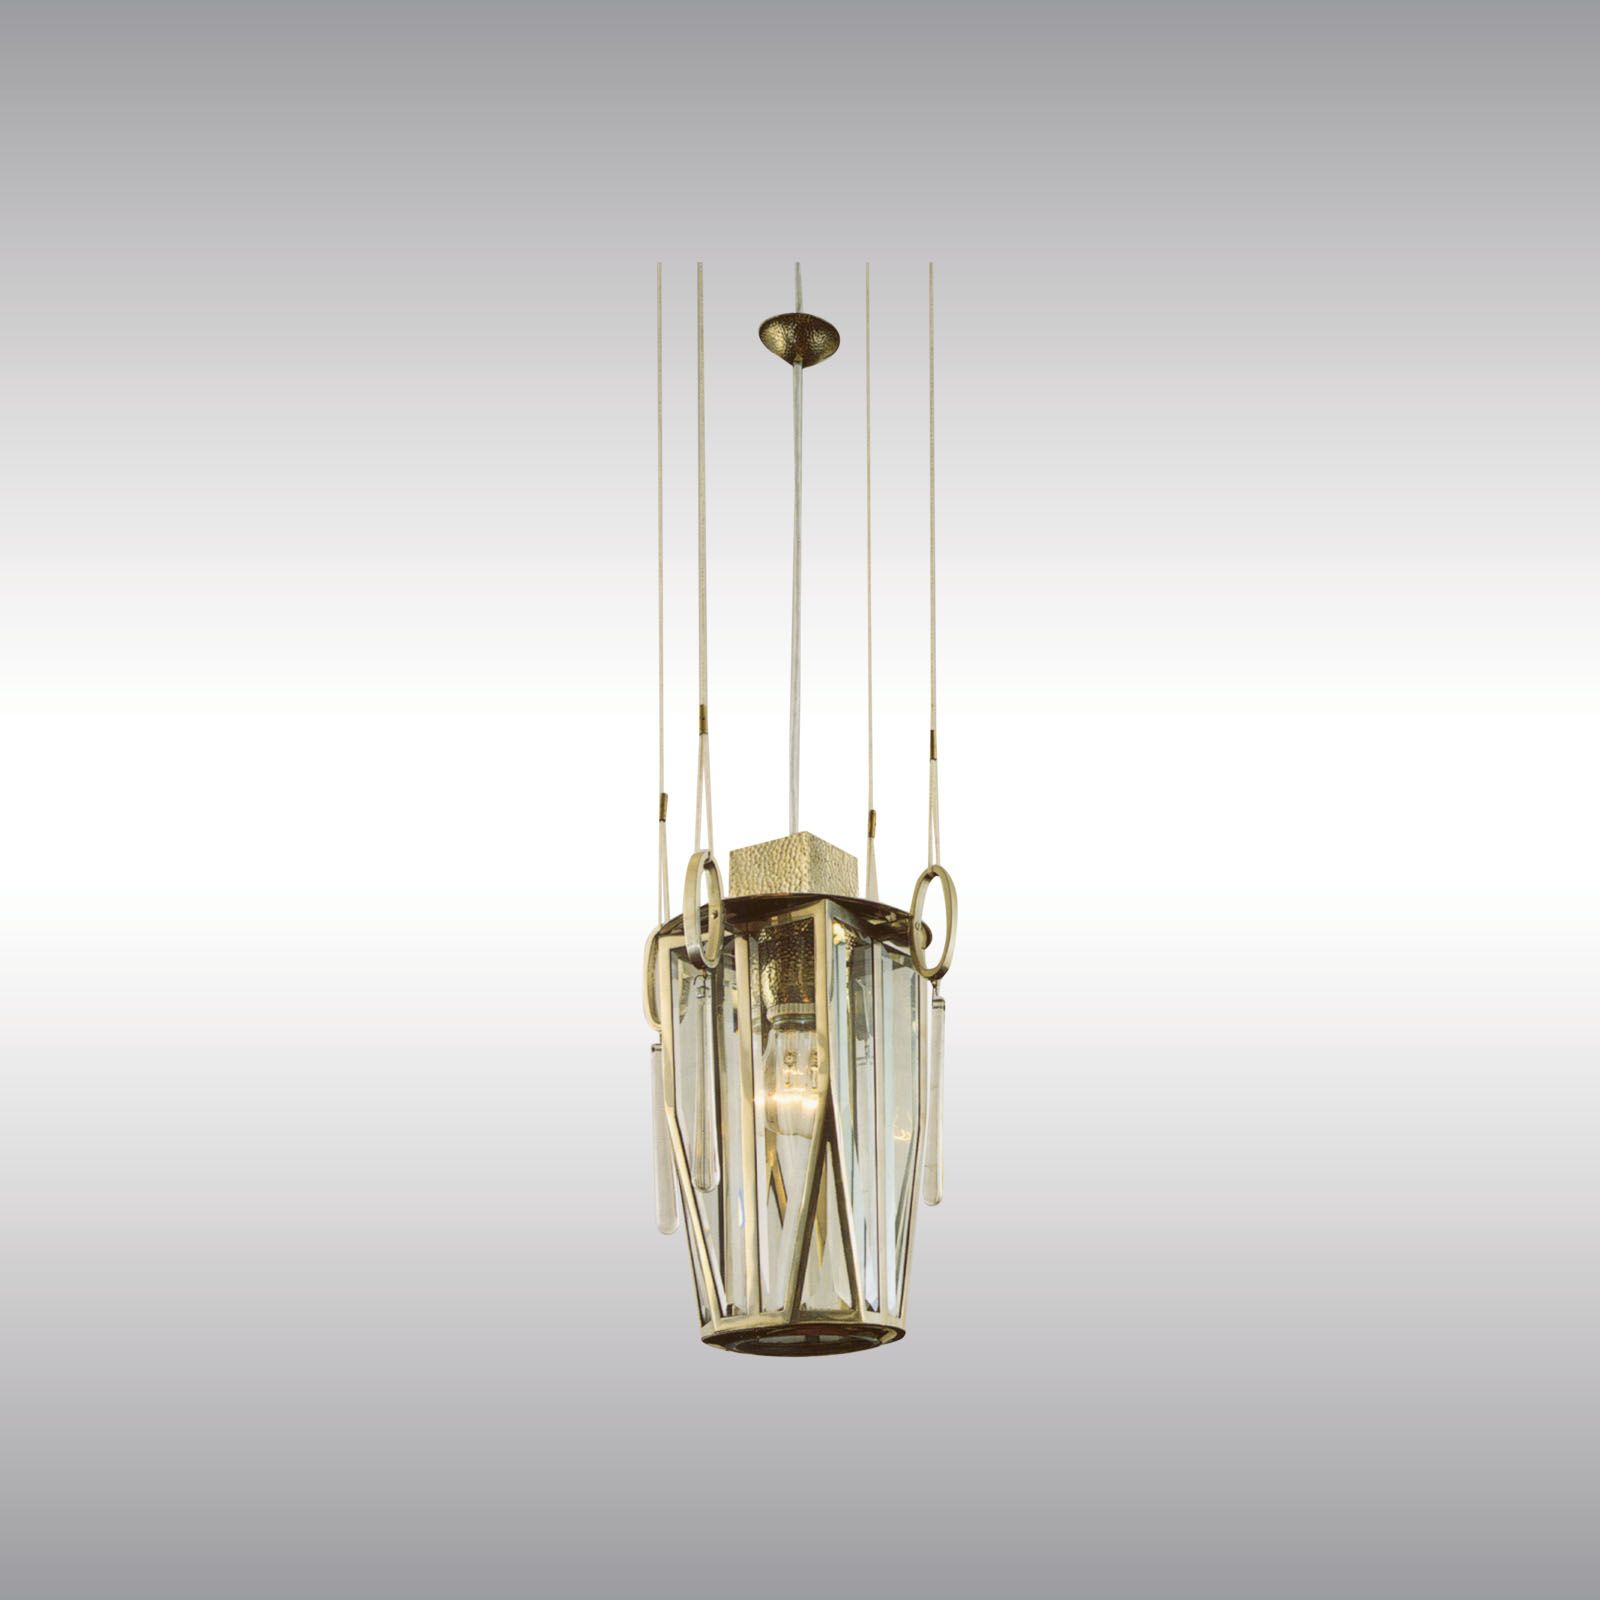 WOKA LAMPS VIENNA - OrderNr.: 21323|Mautner-Markhof pendant - Design: Josef Hoffmann